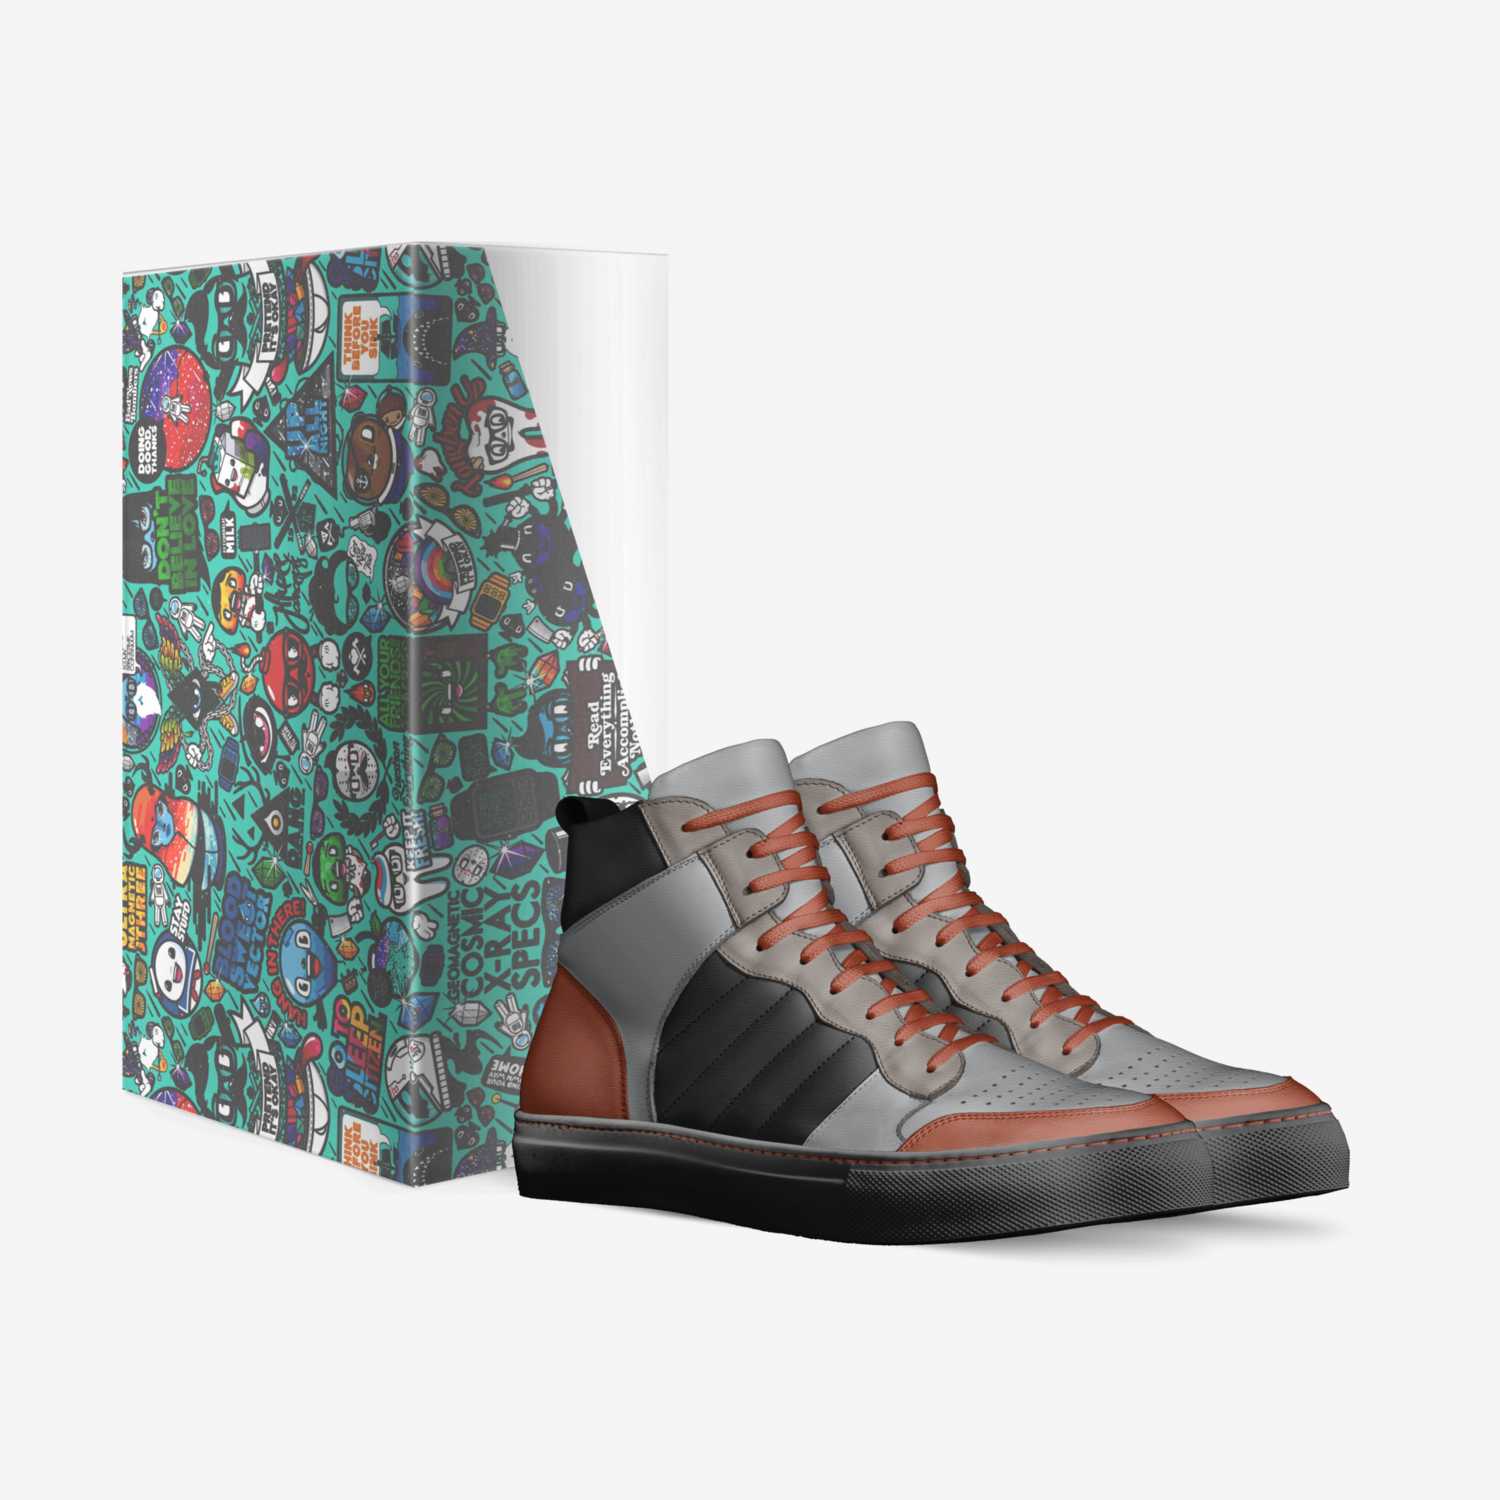 Adj custom made in Italy shoes by Alina Dunham | Box view